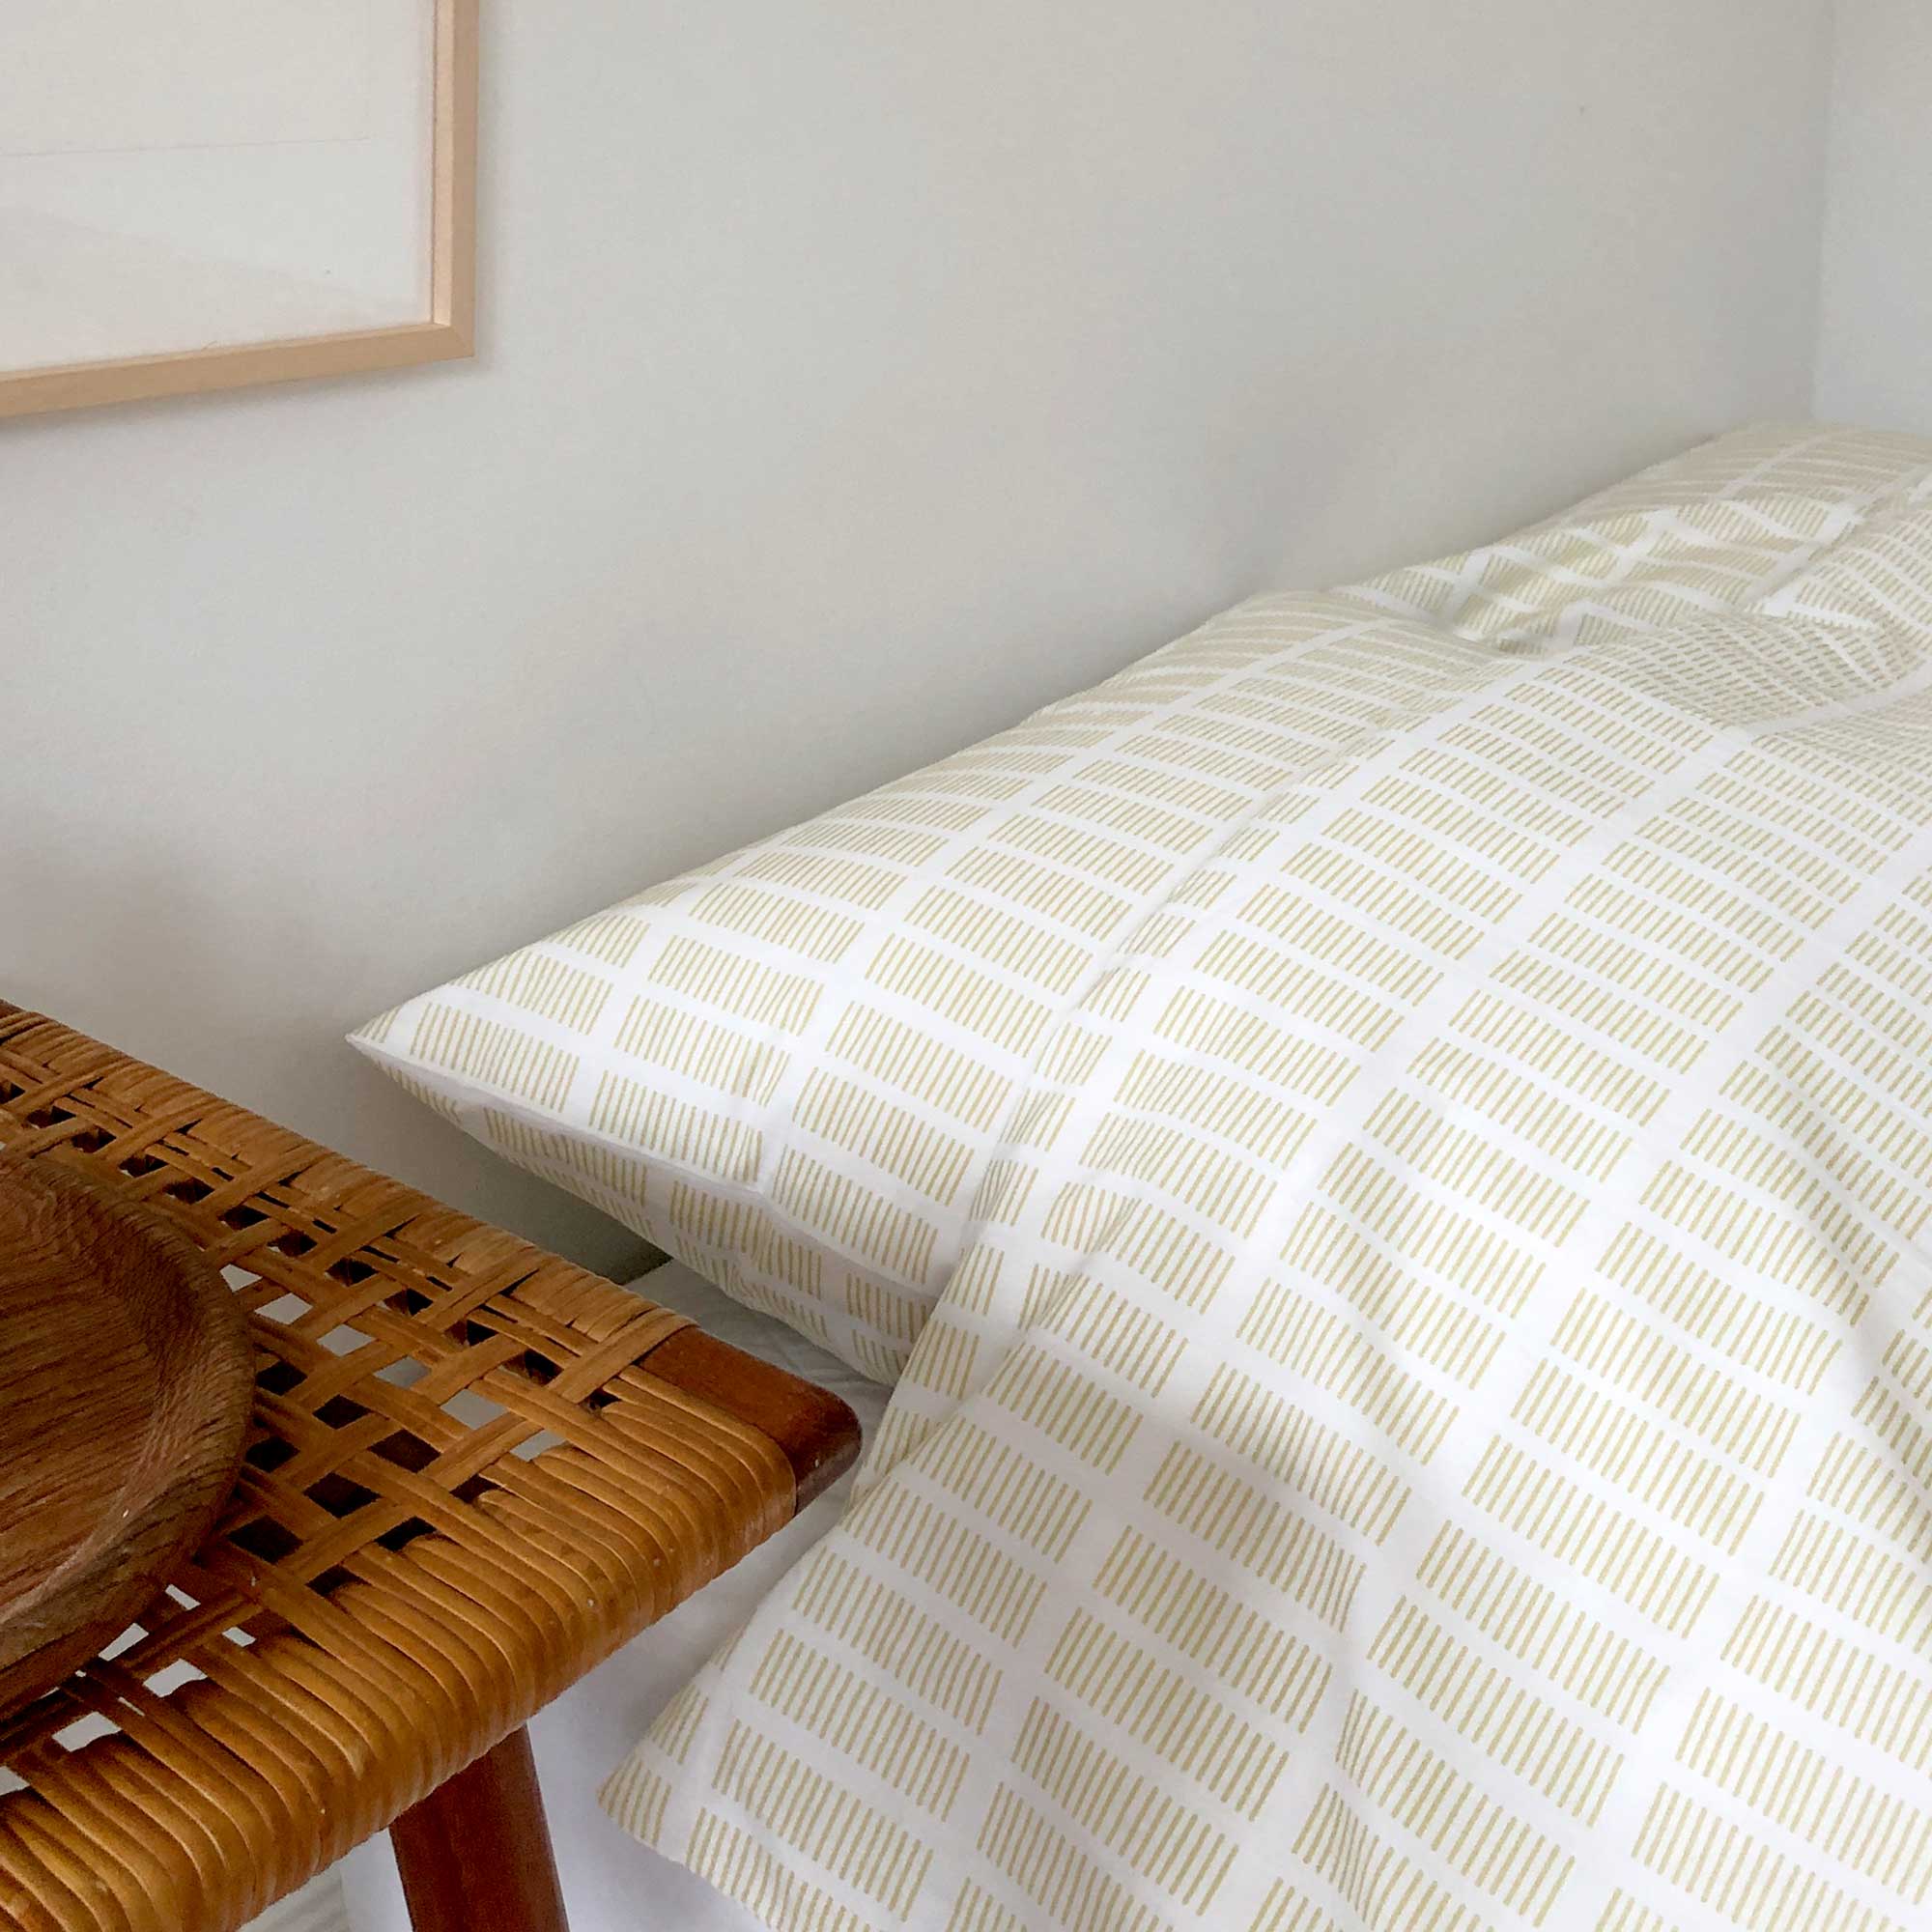 Tile Lemon Grass sengetøj i økologisk bomuld, design af Anne Rosenberg, RosenbergCph